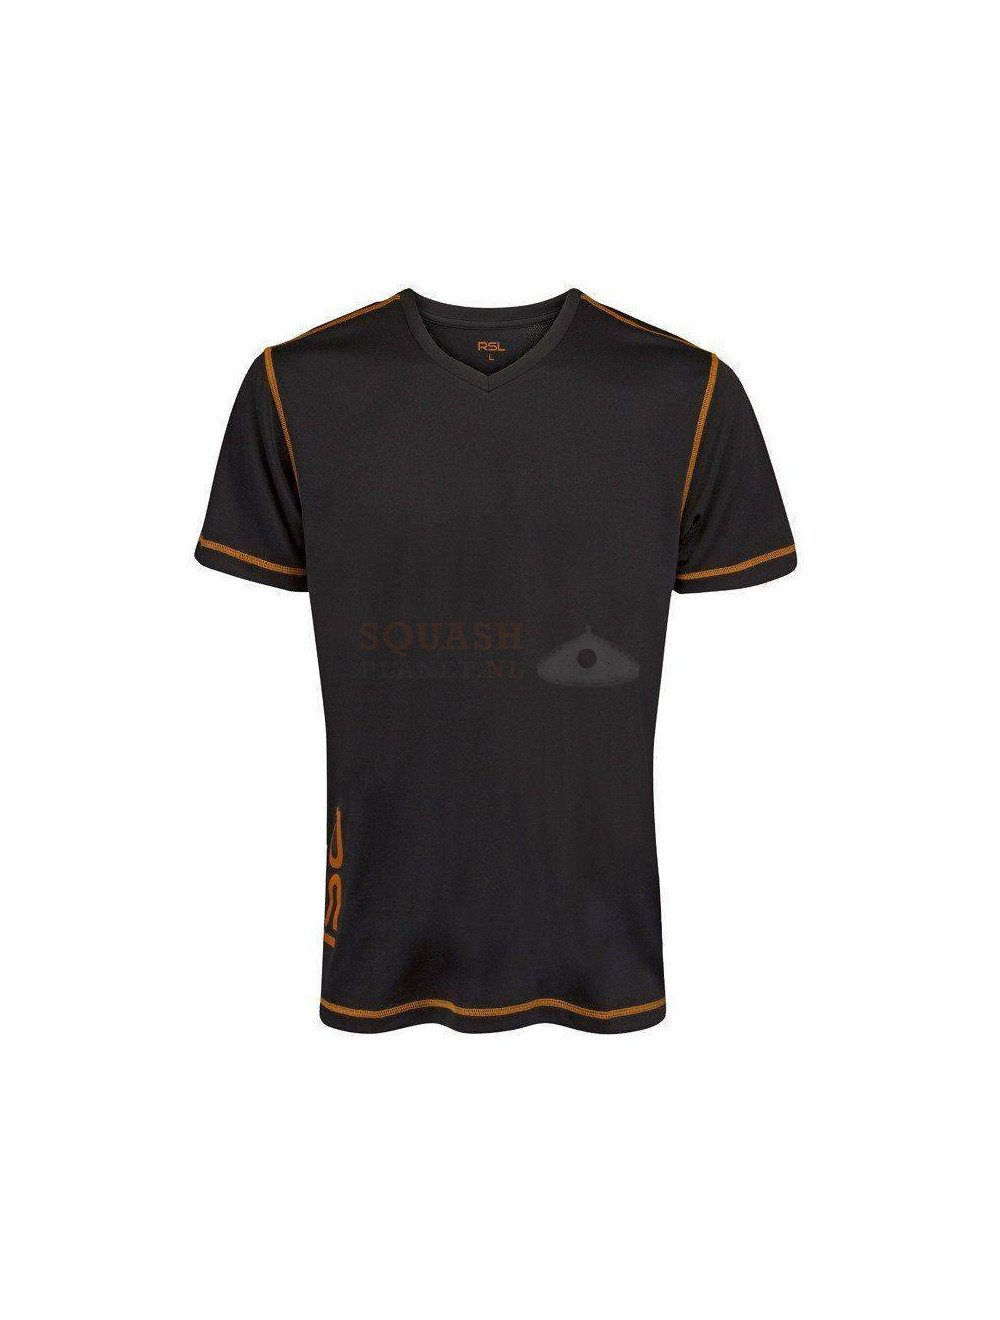 Ik denk dat ik ziek ben rib Gehoorzaam RSL Classic T-shirt - Zwart/Oranje kopen? - Squashplanet.nl